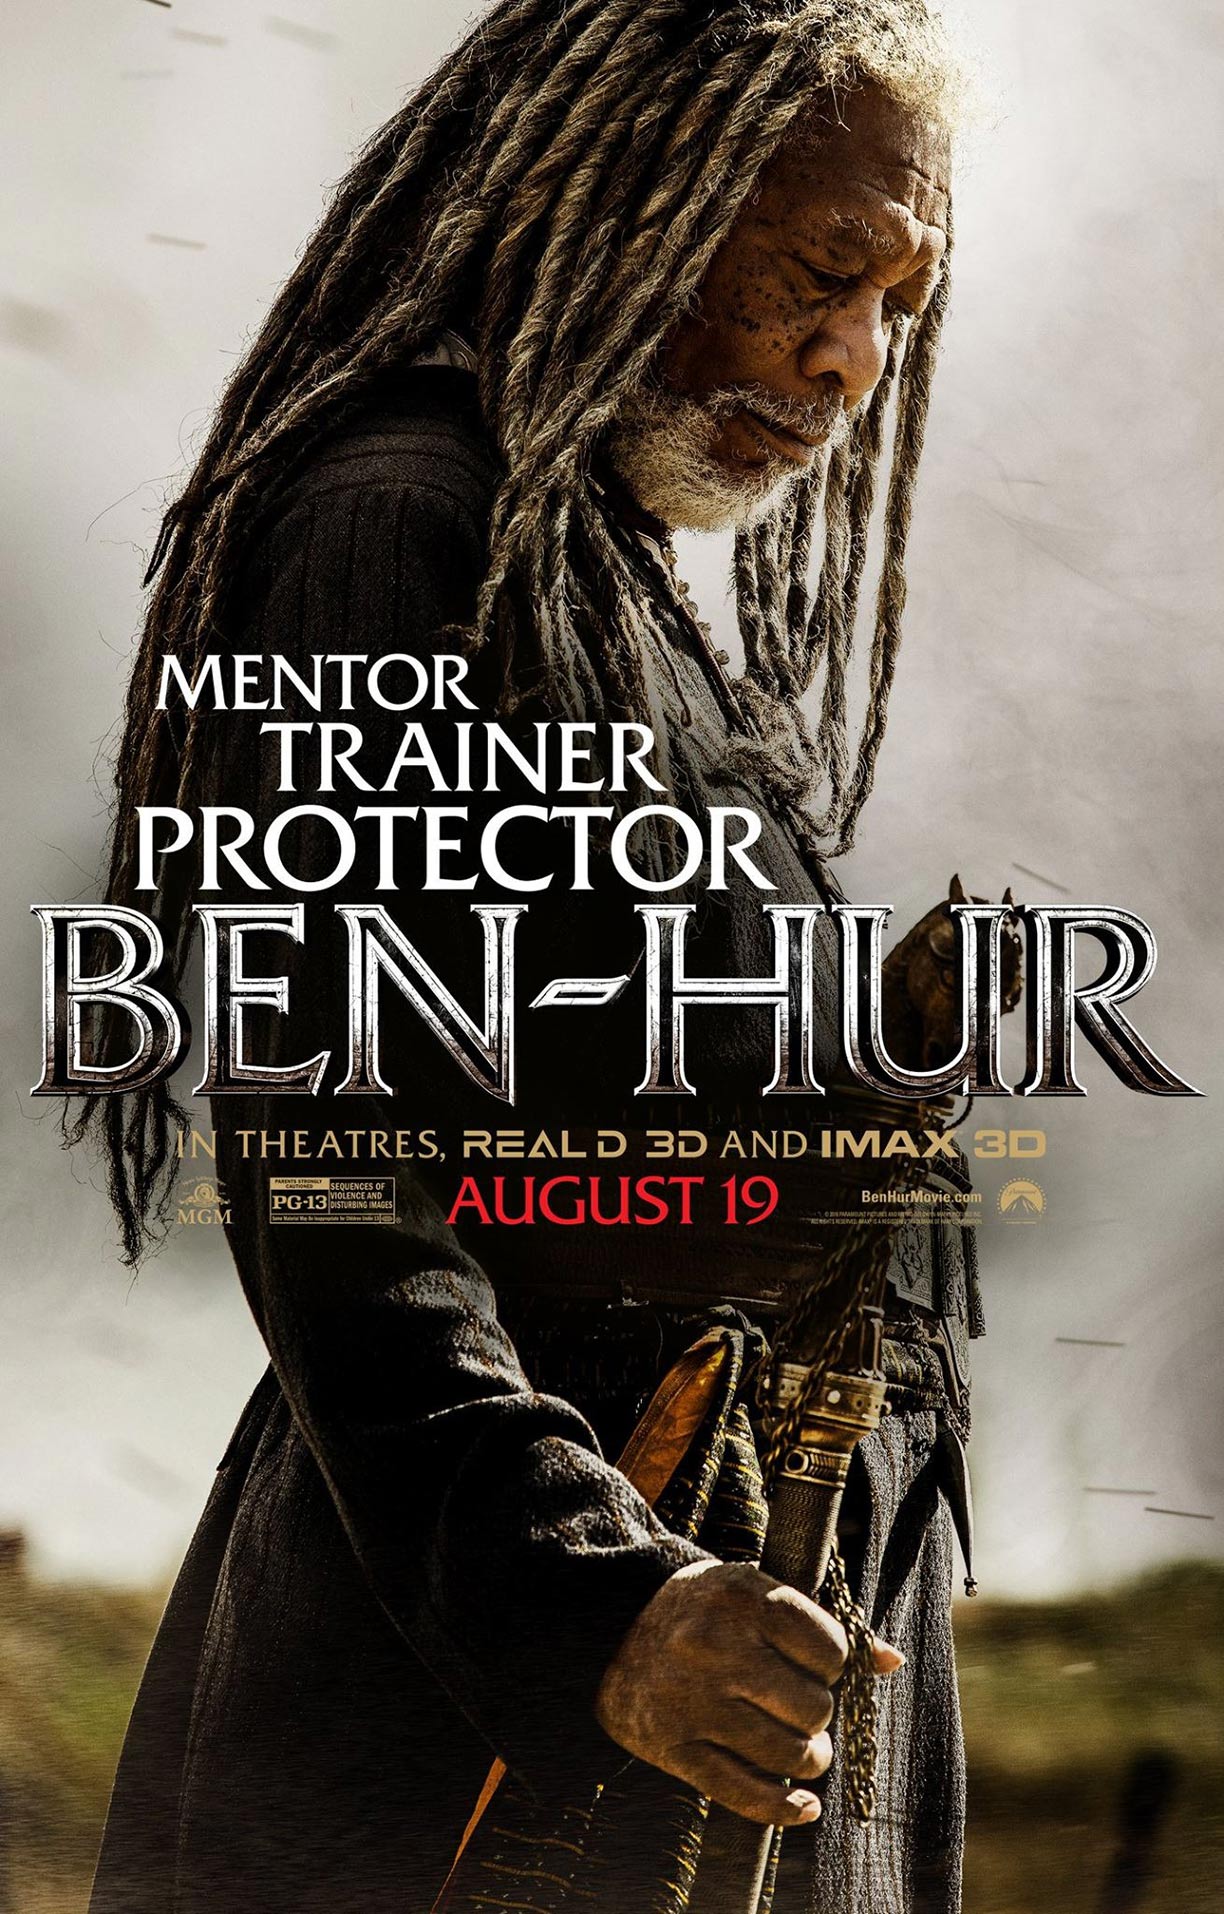 Ben-Hur (2016) Poster #3 - Trailer Addict1224 x 1914